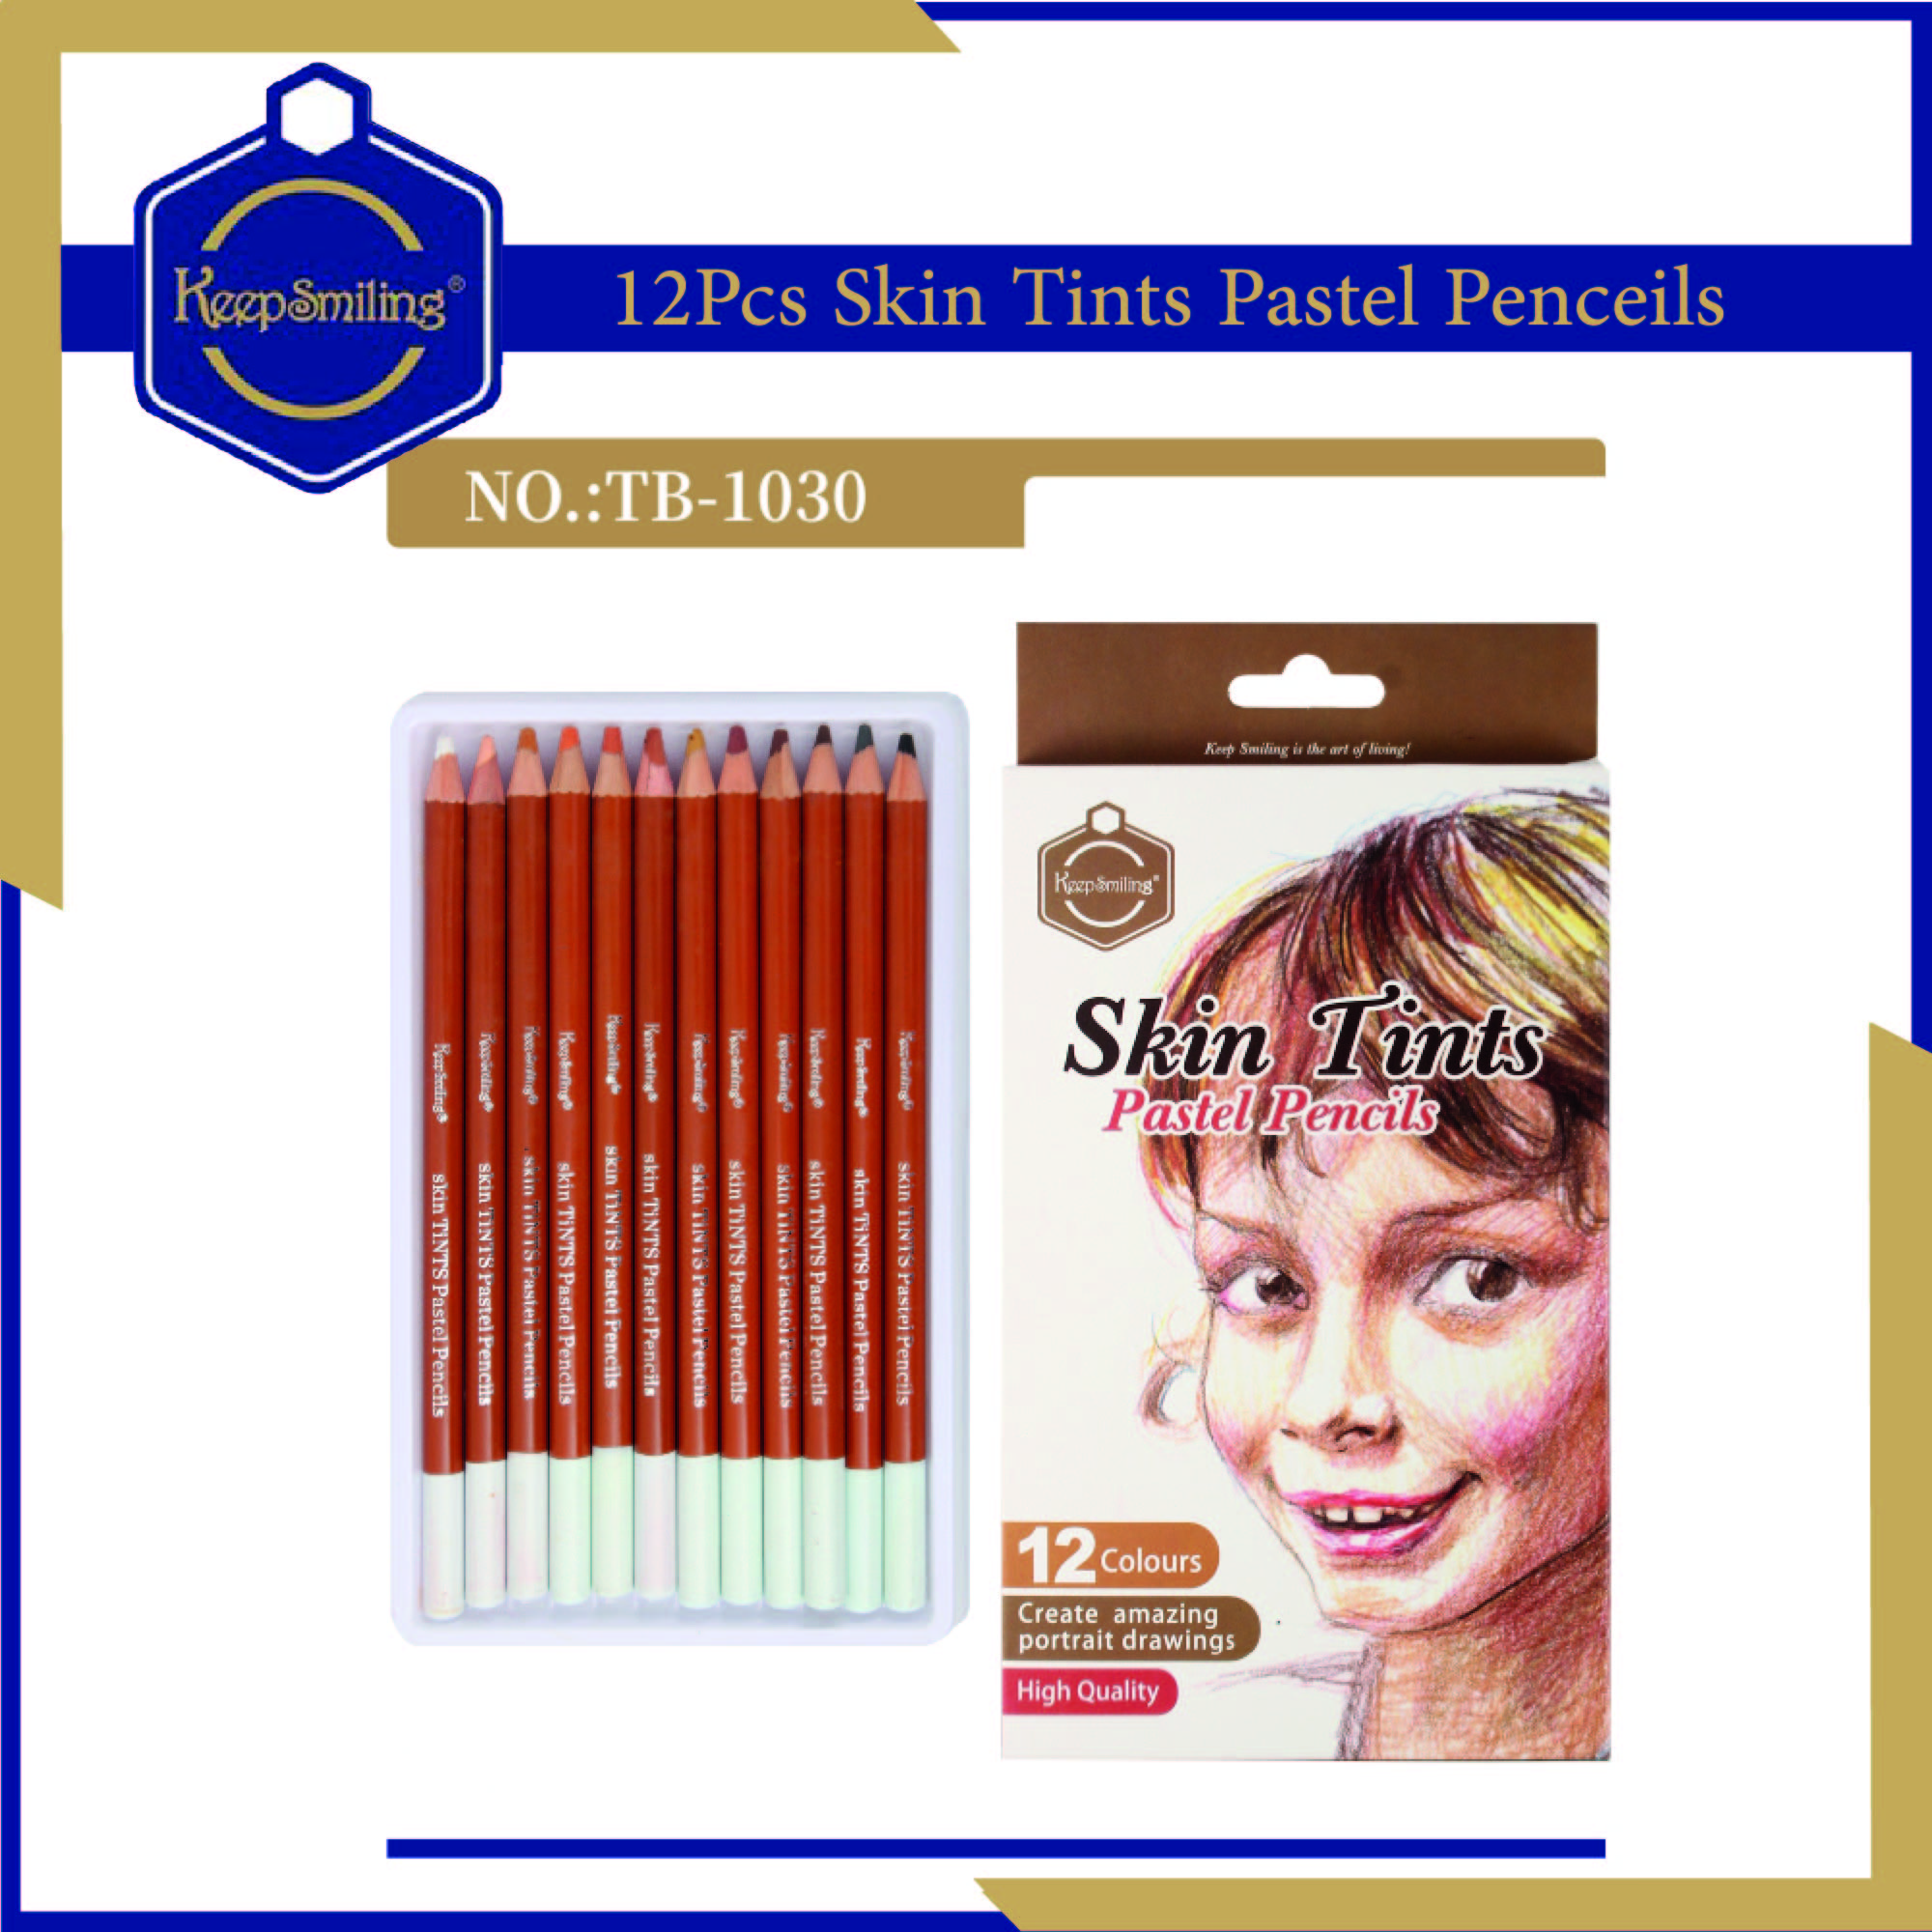 Keep Smiling Skin Tints Pastel Pencils, Skin Tints Color Pencils (12 Pieces) Best Sketching Pencils